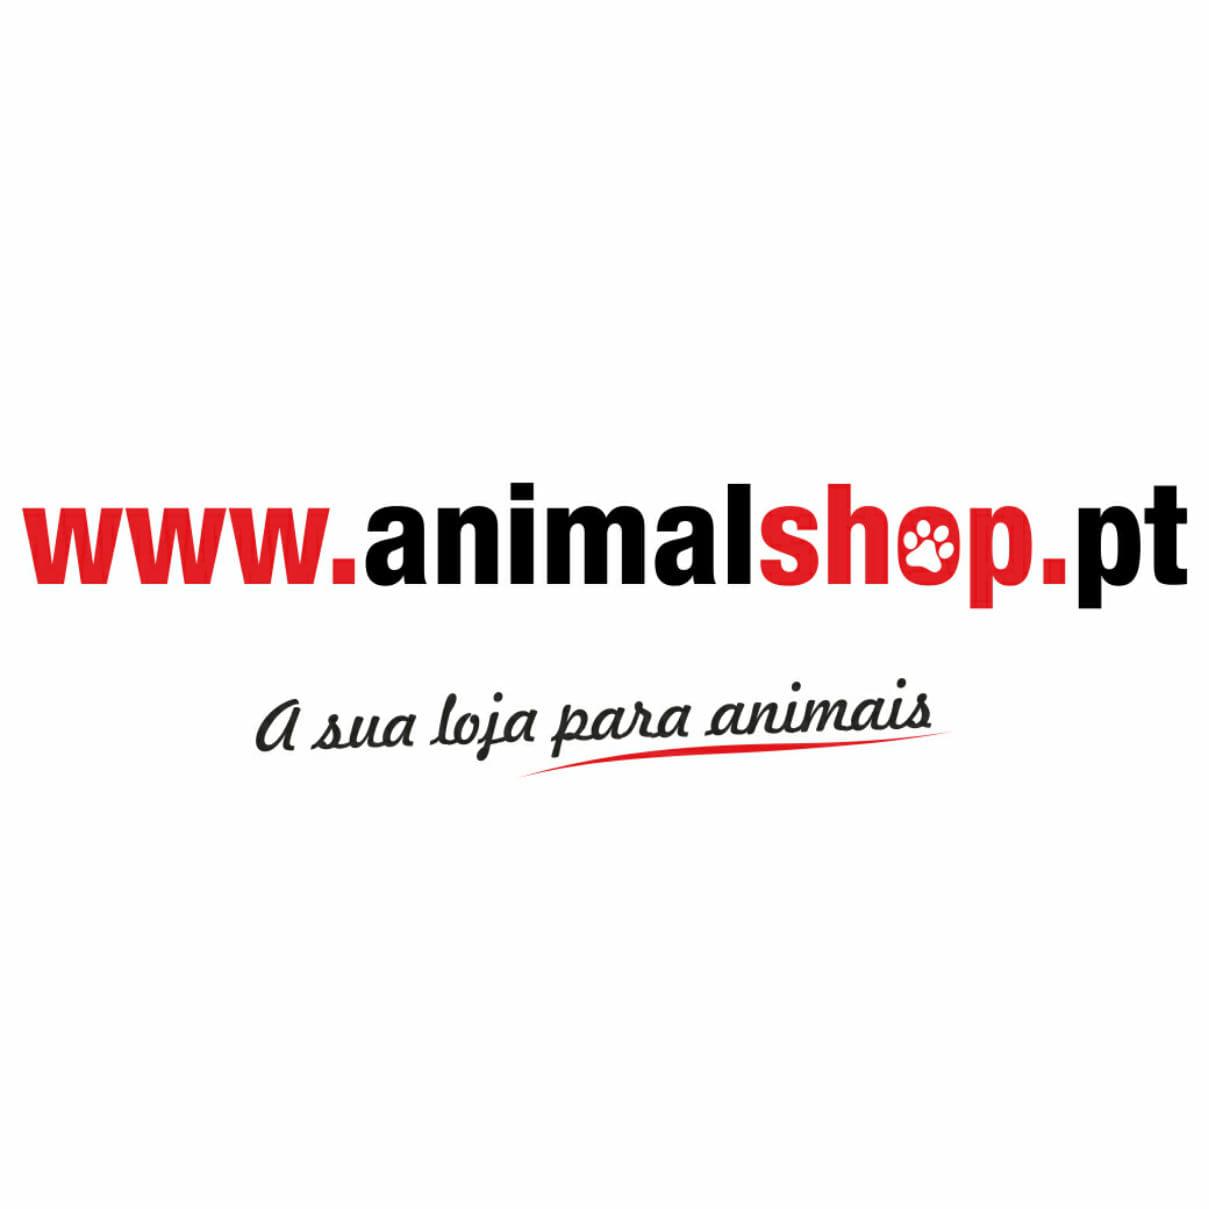 Images Animal shop